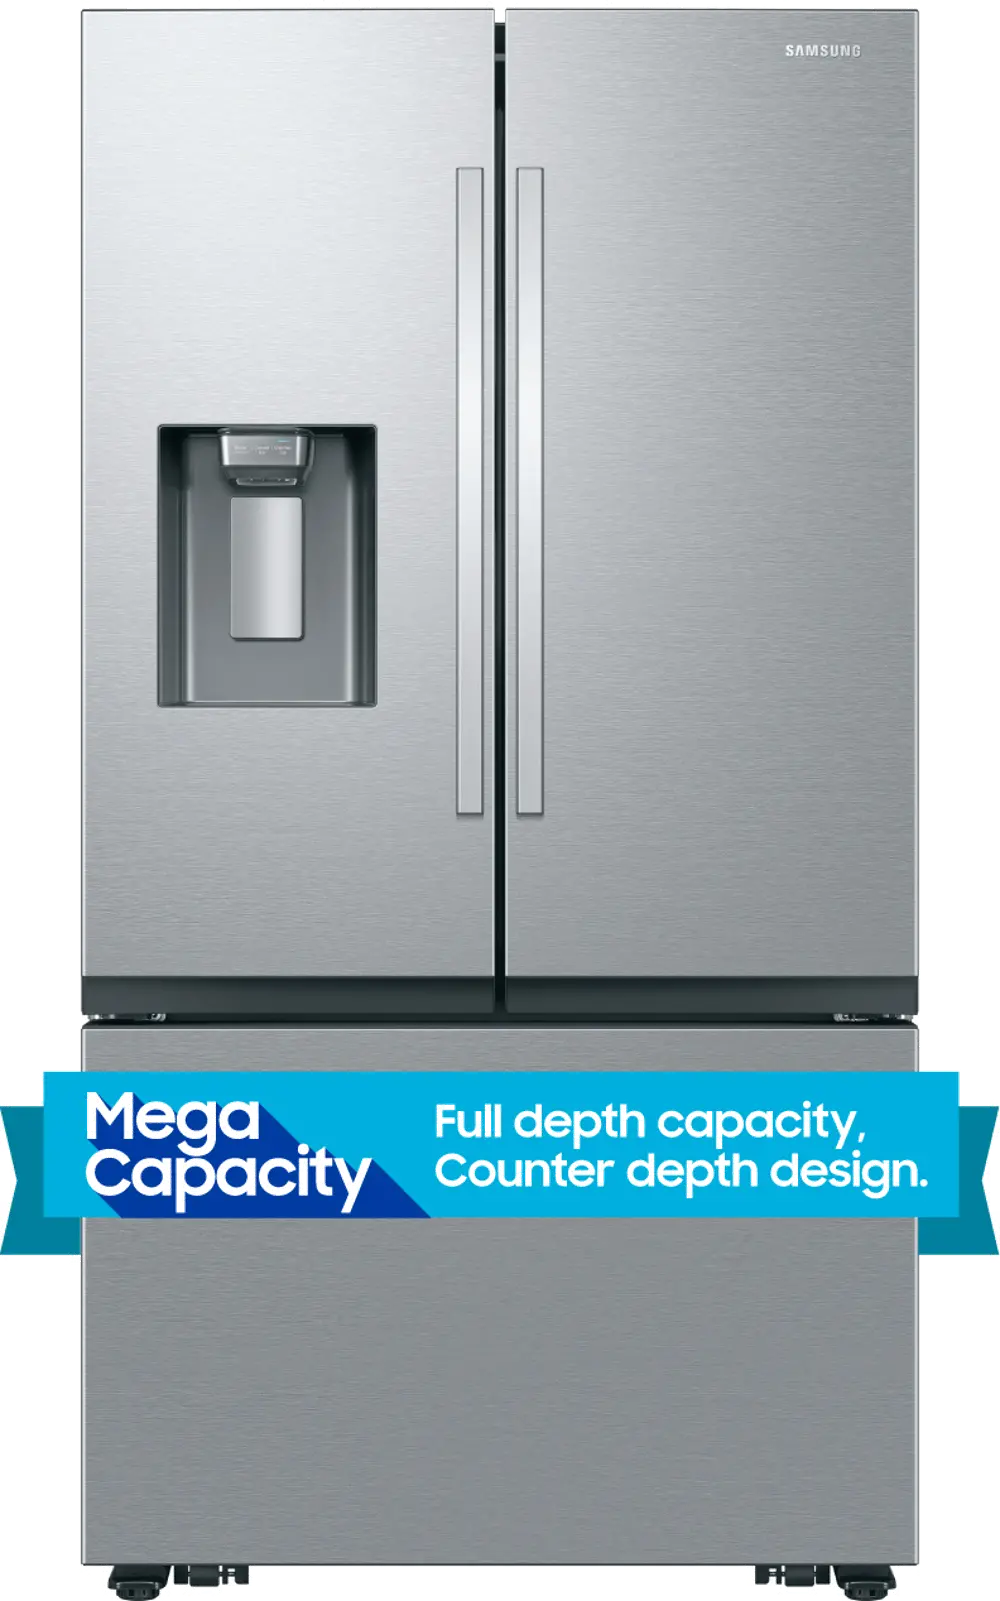 RF27CG5400SR Samsung 26 cu ft Mega Capacity French Door Refrigerator - Counter Depth Stainless Steel-1